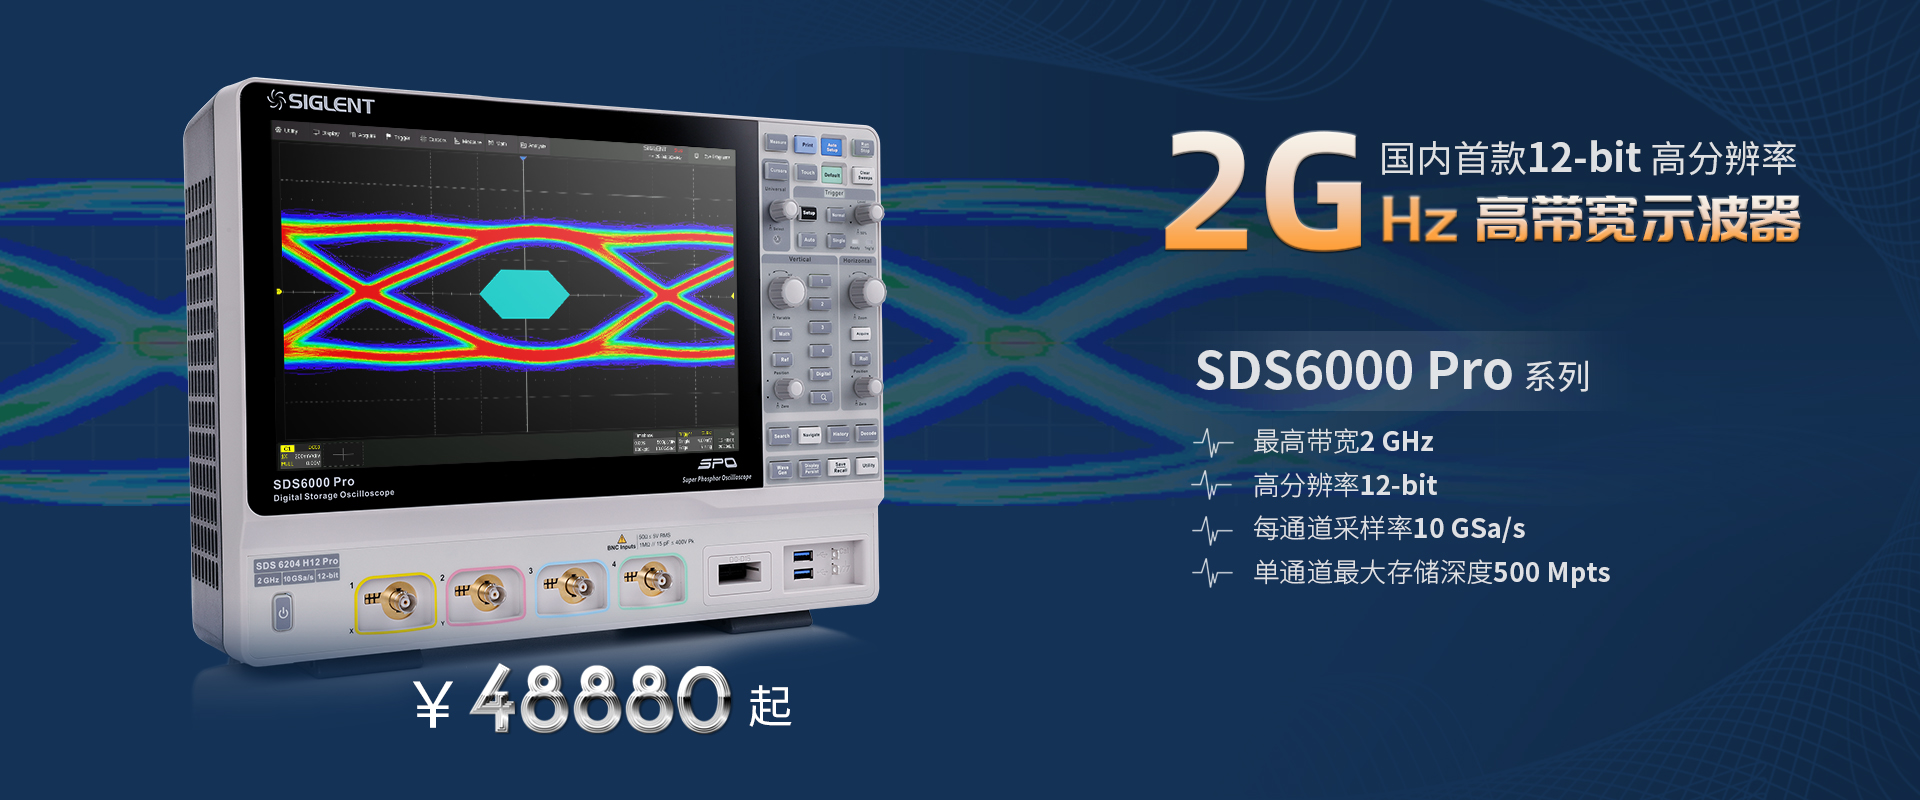 2 Ghz带宽 鼎阳科技发布sds6000 Pro高分辨率高带宽数字示波器新型号